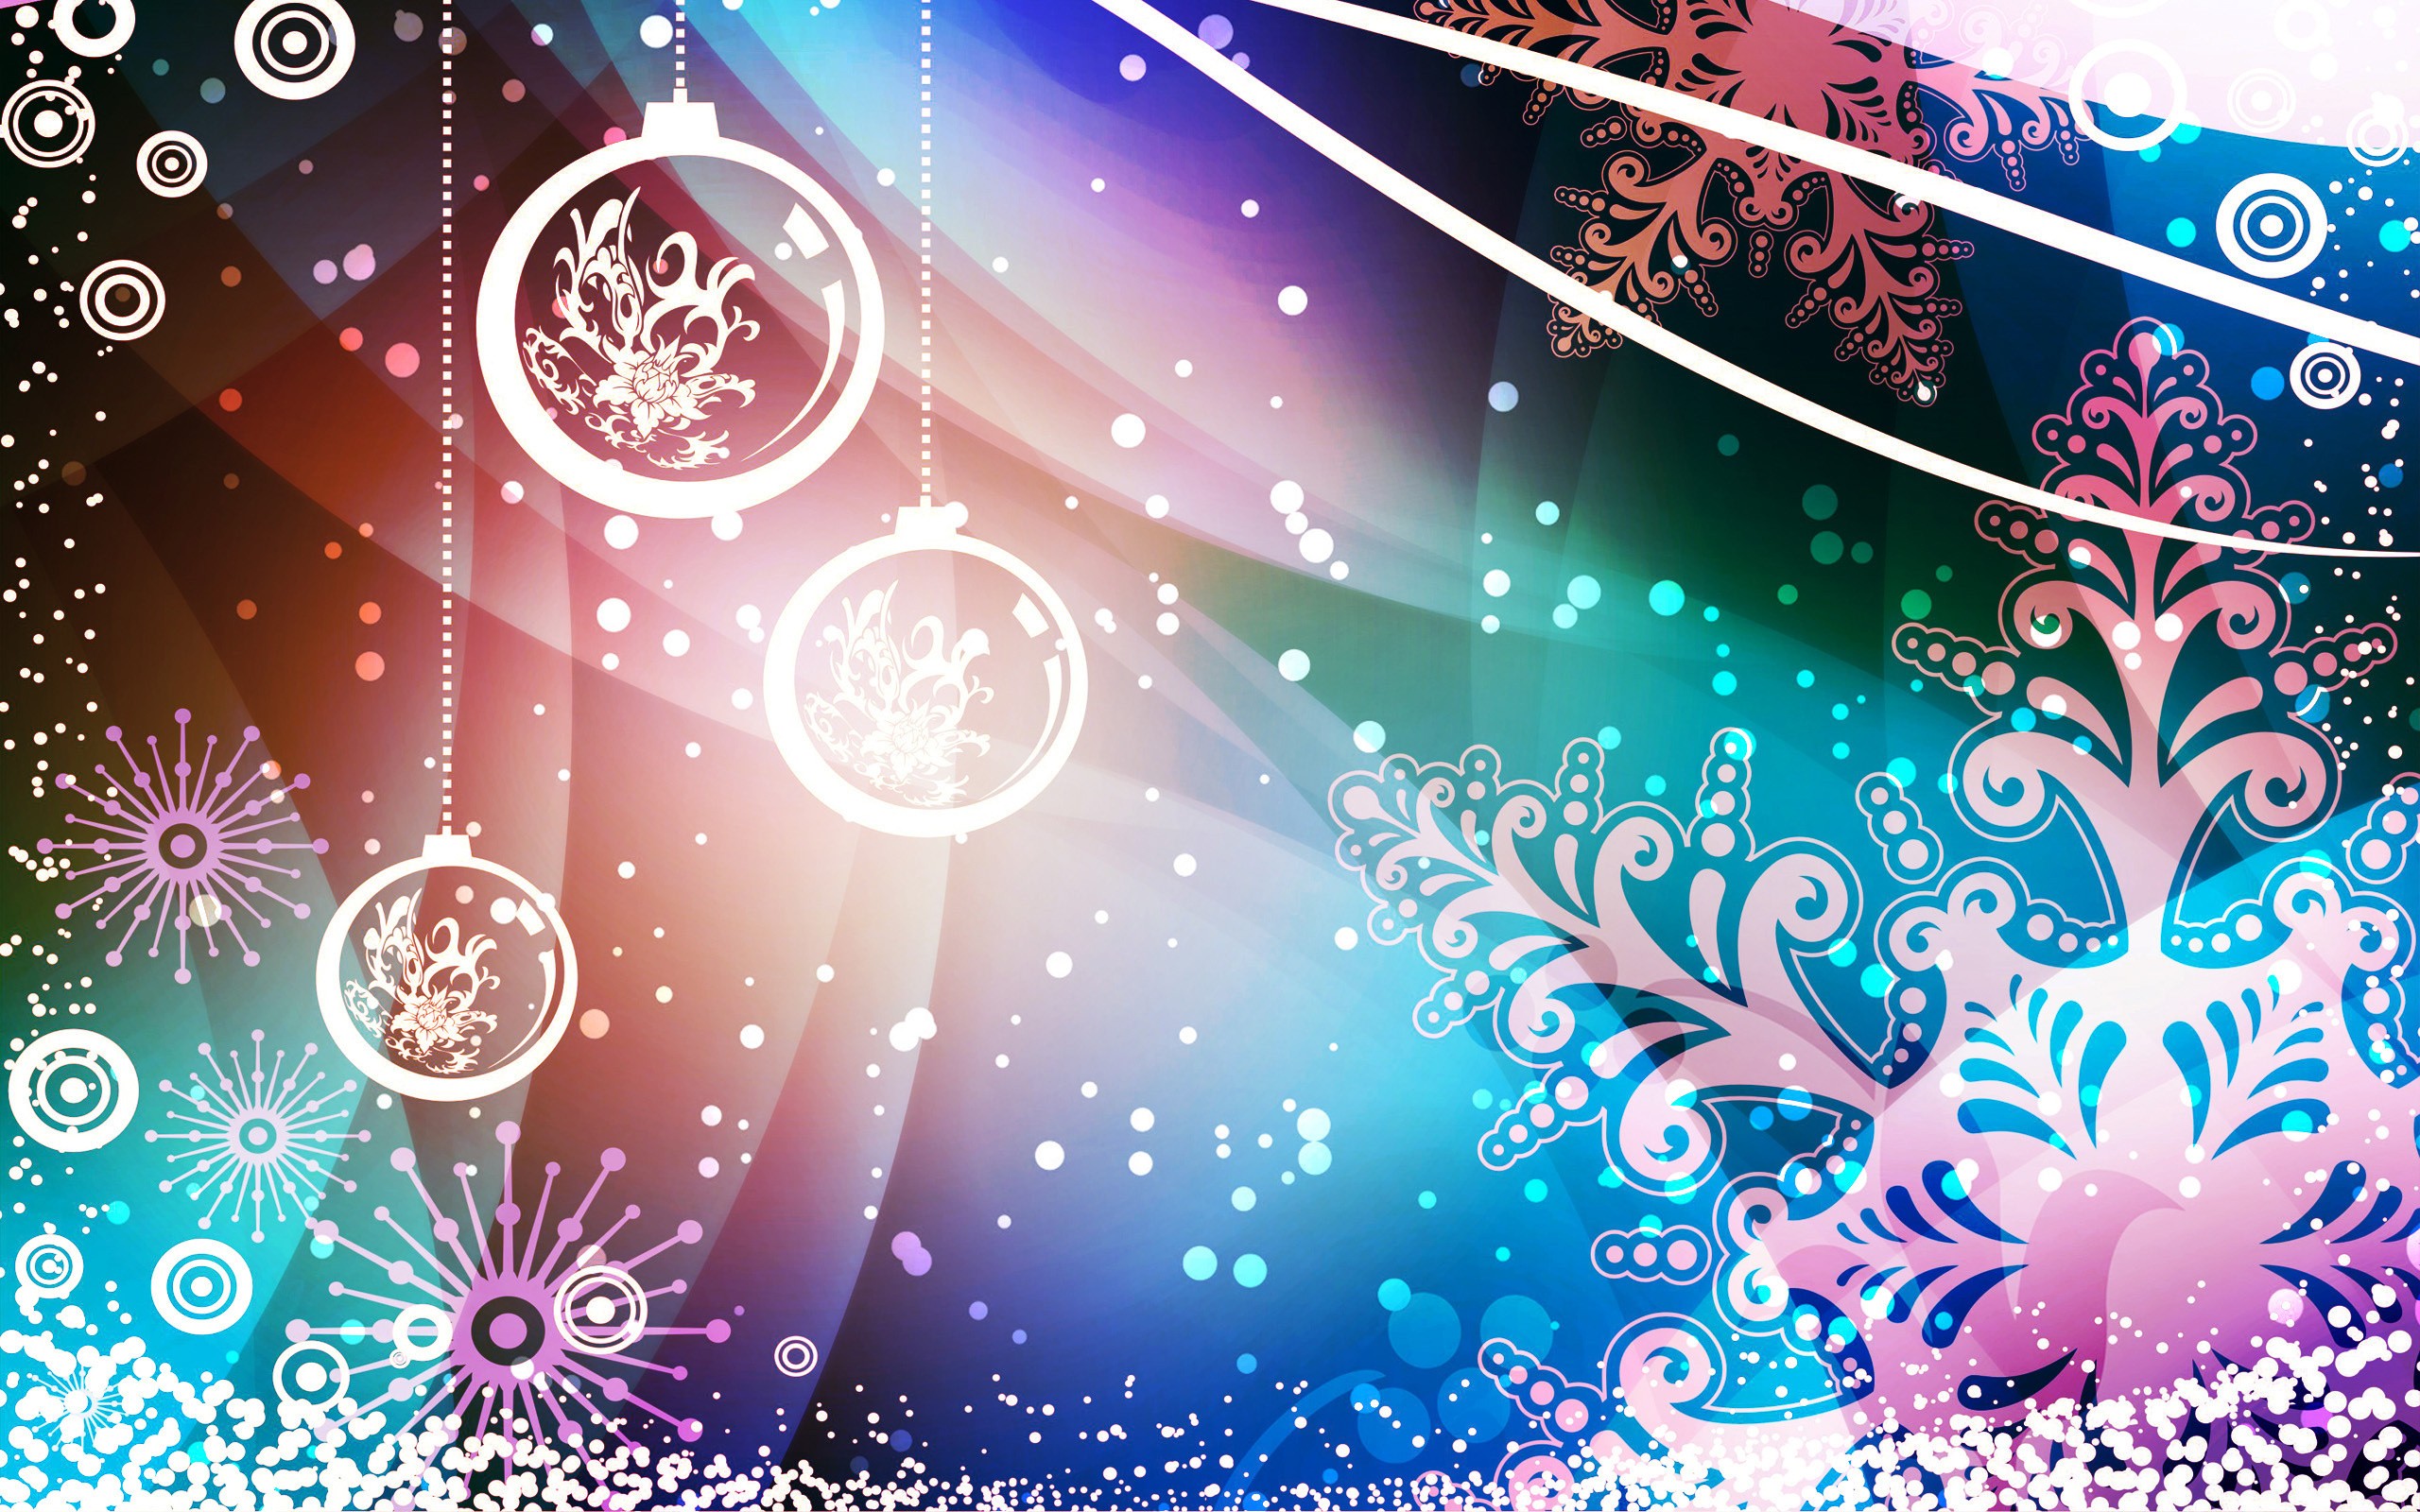 General 2560x1600 Christmas New Year vector art snowflakes Christmas ornaments  holiday digital art